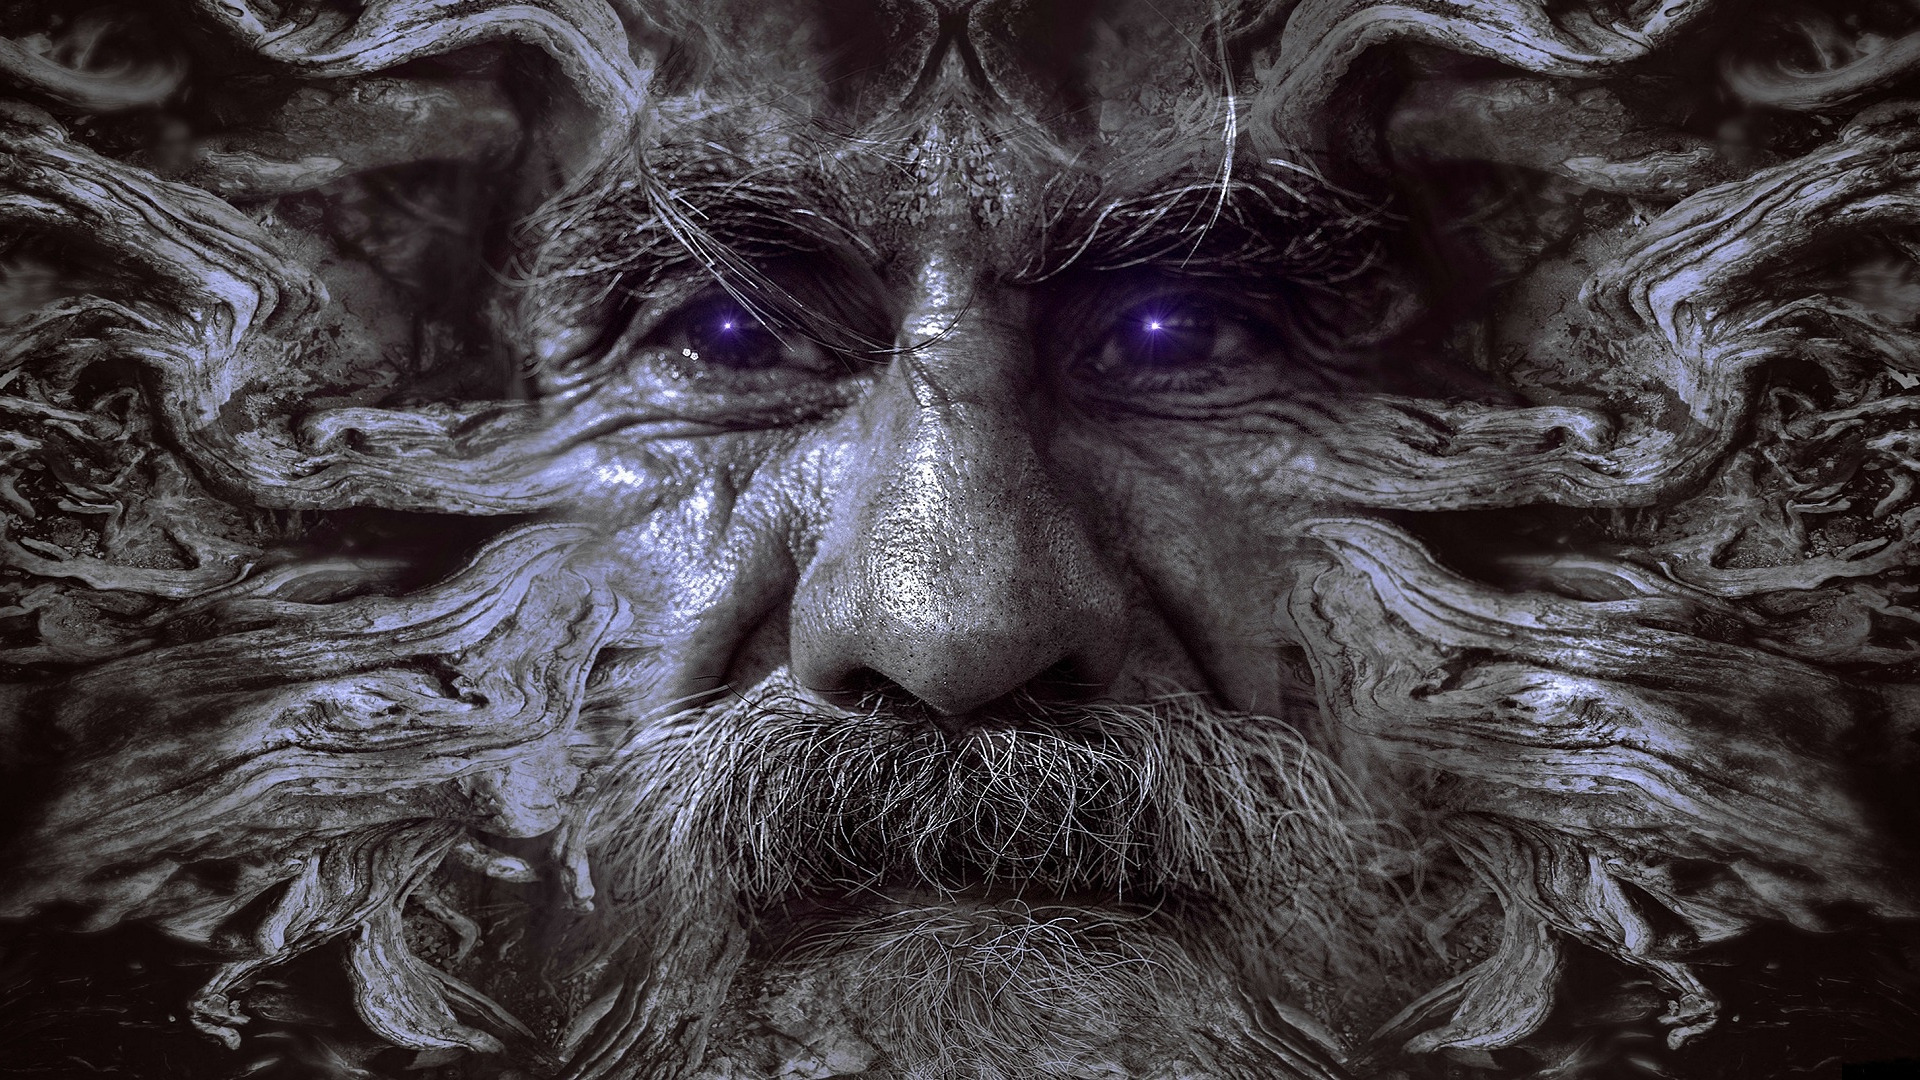 General 1920x1080 fantasy art digital art artwork face old people purple eyes beard selective coloring photoshopped glowing eyes men roots